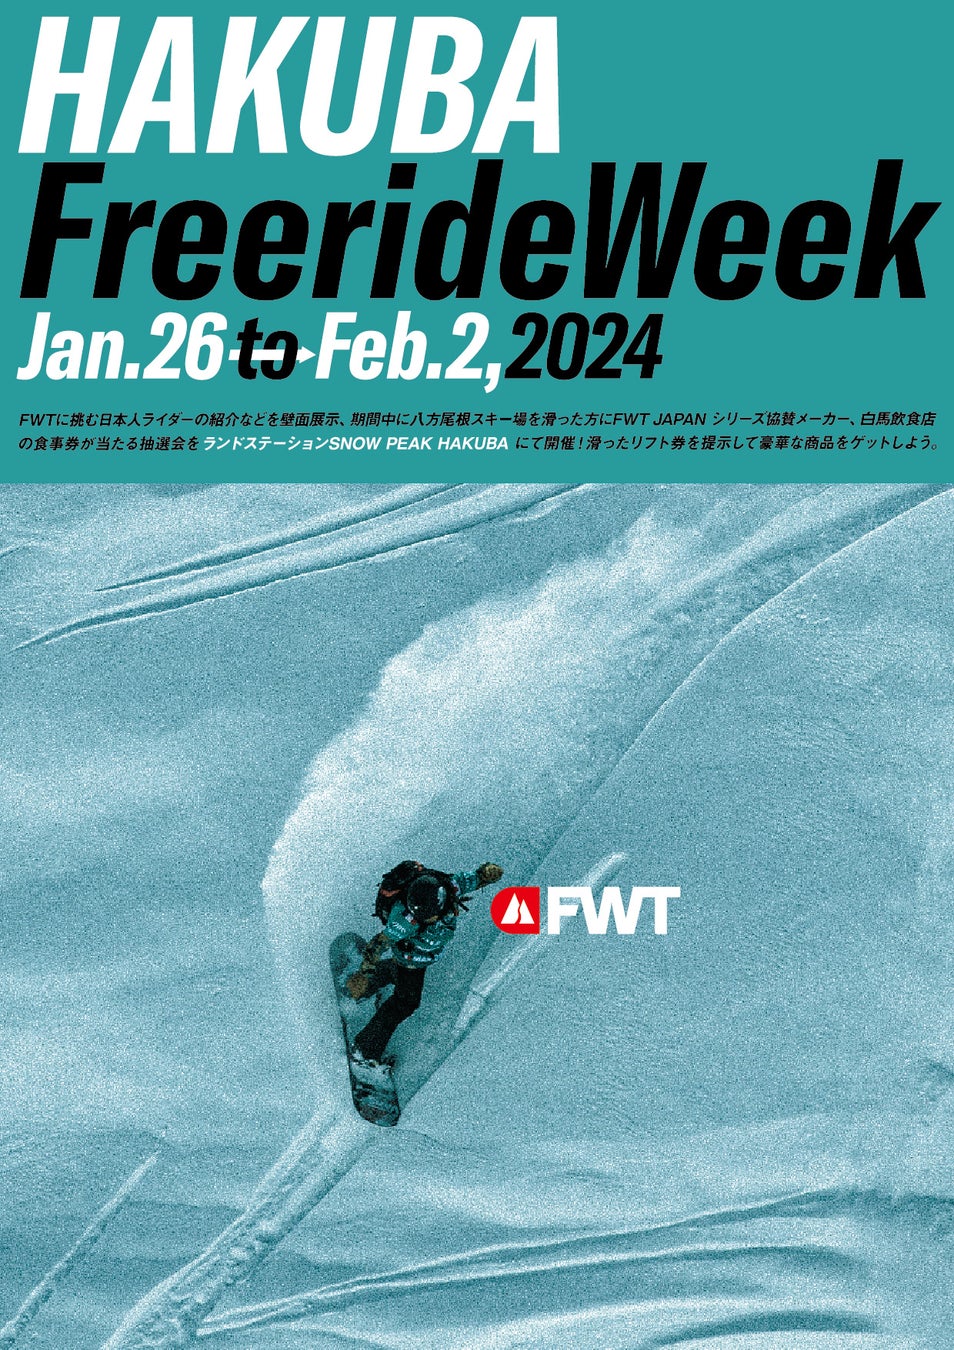 HAKUBA Freeride Week 開催！1月26日〜2月2日の期間中、スノーピークランドステーション白馬にて抽選会やFreeride World Tourの展示を実施